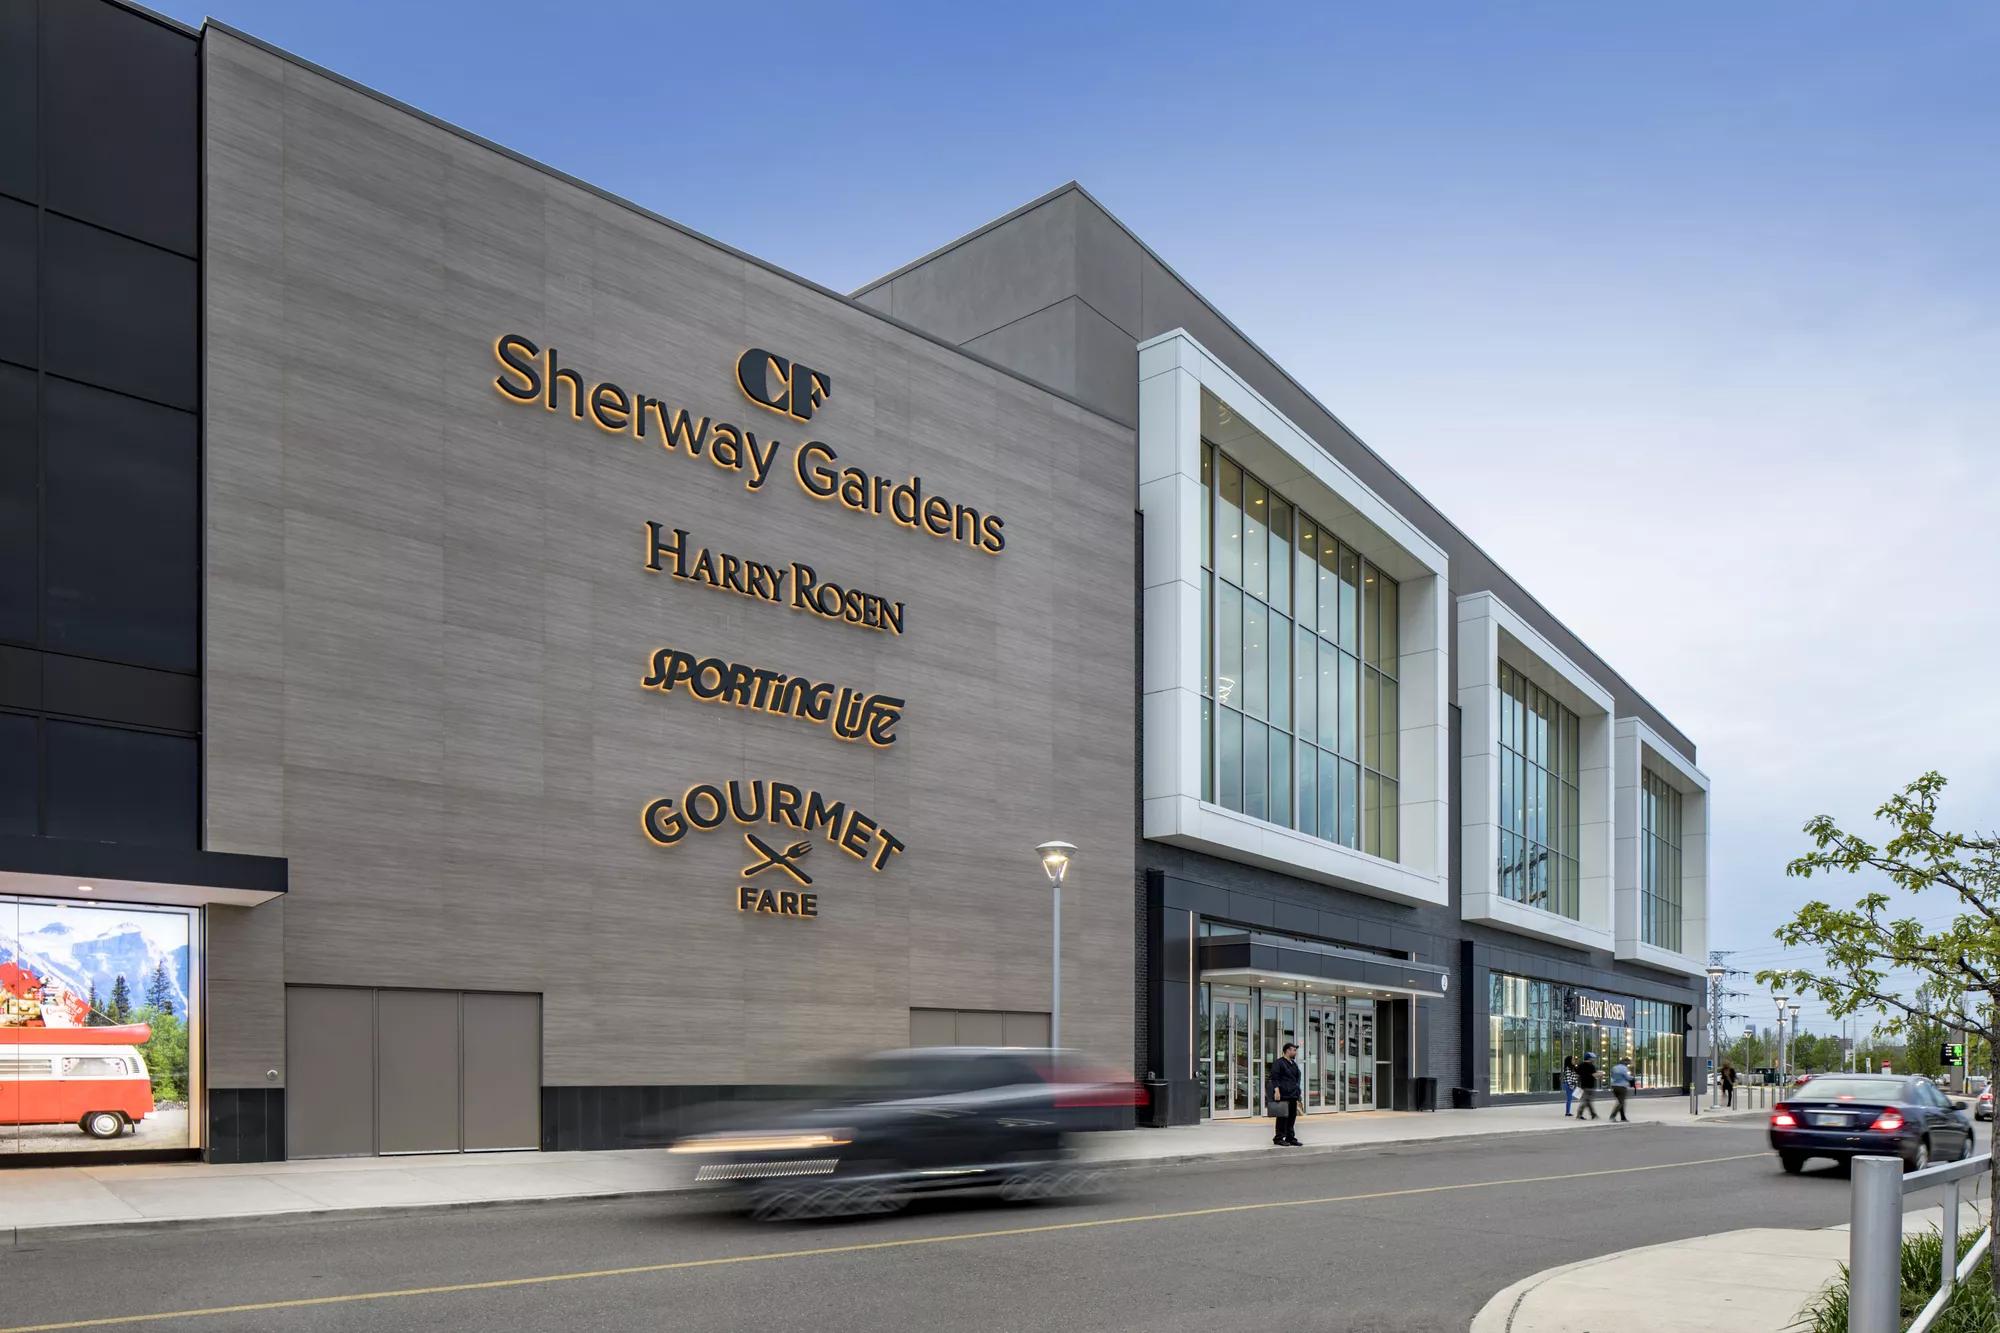 Samsung store at Sherway Gardens by Cutler, Toronto – Canada